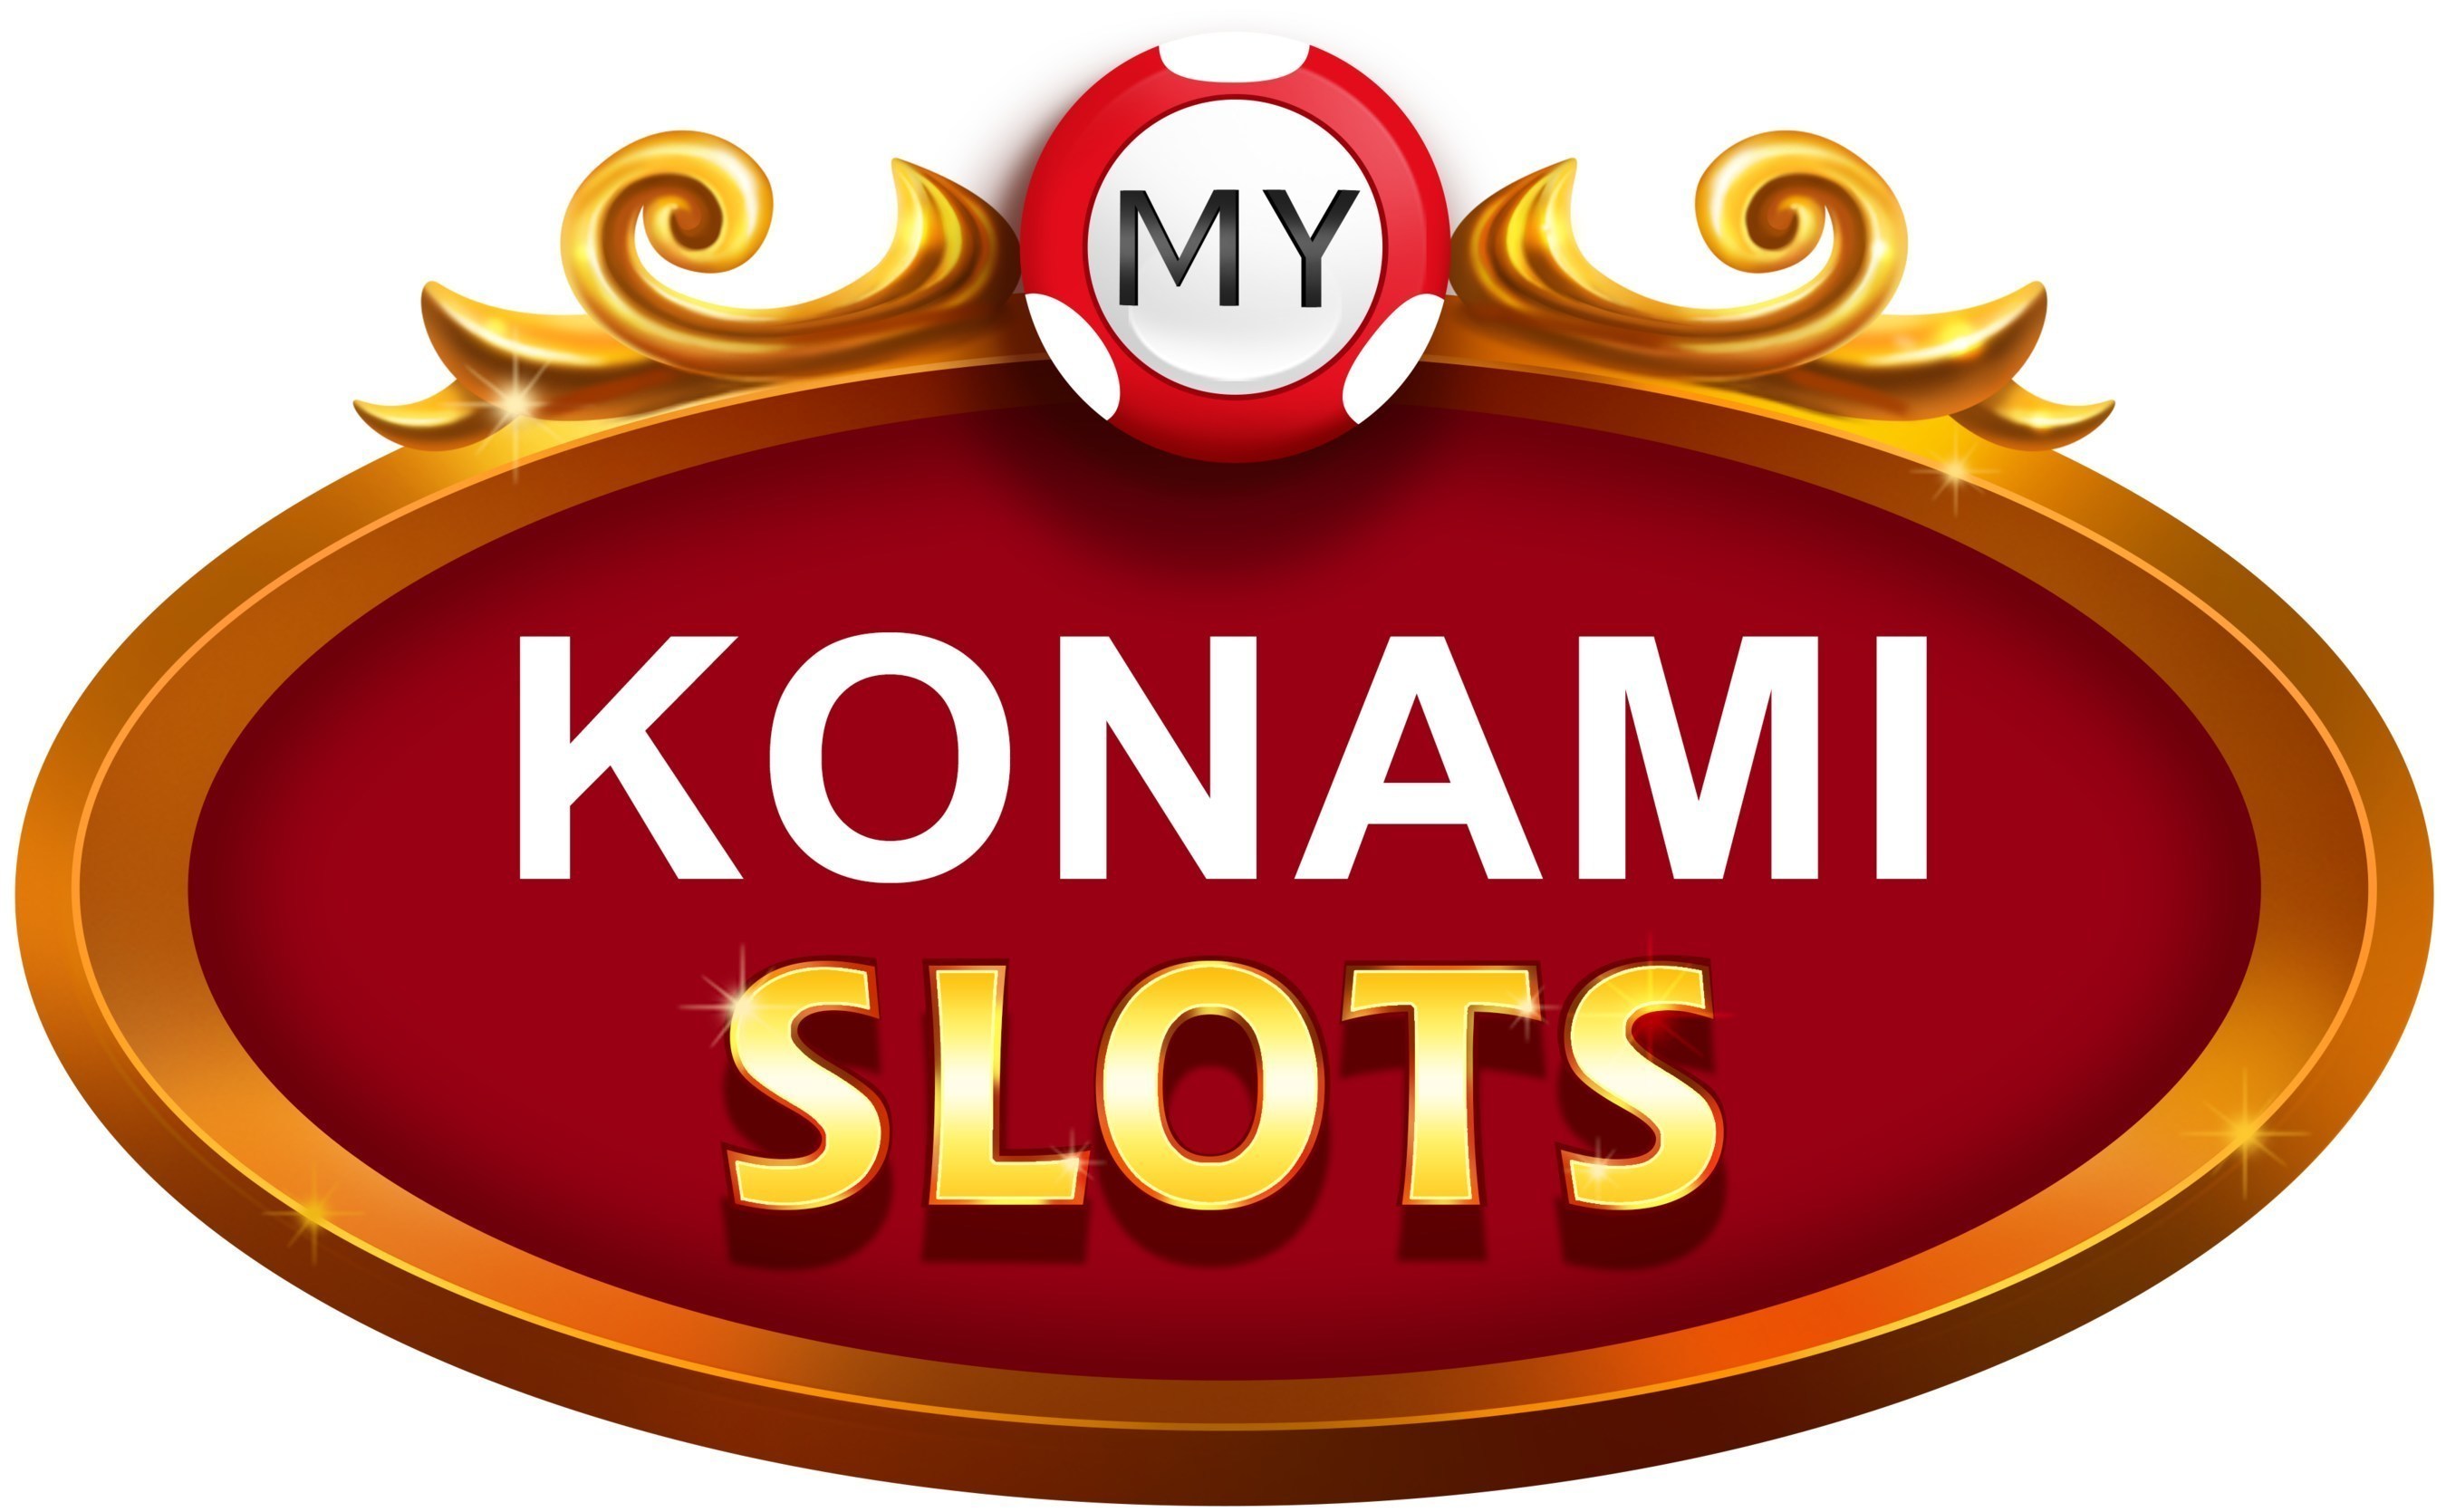 Konami slot games free online